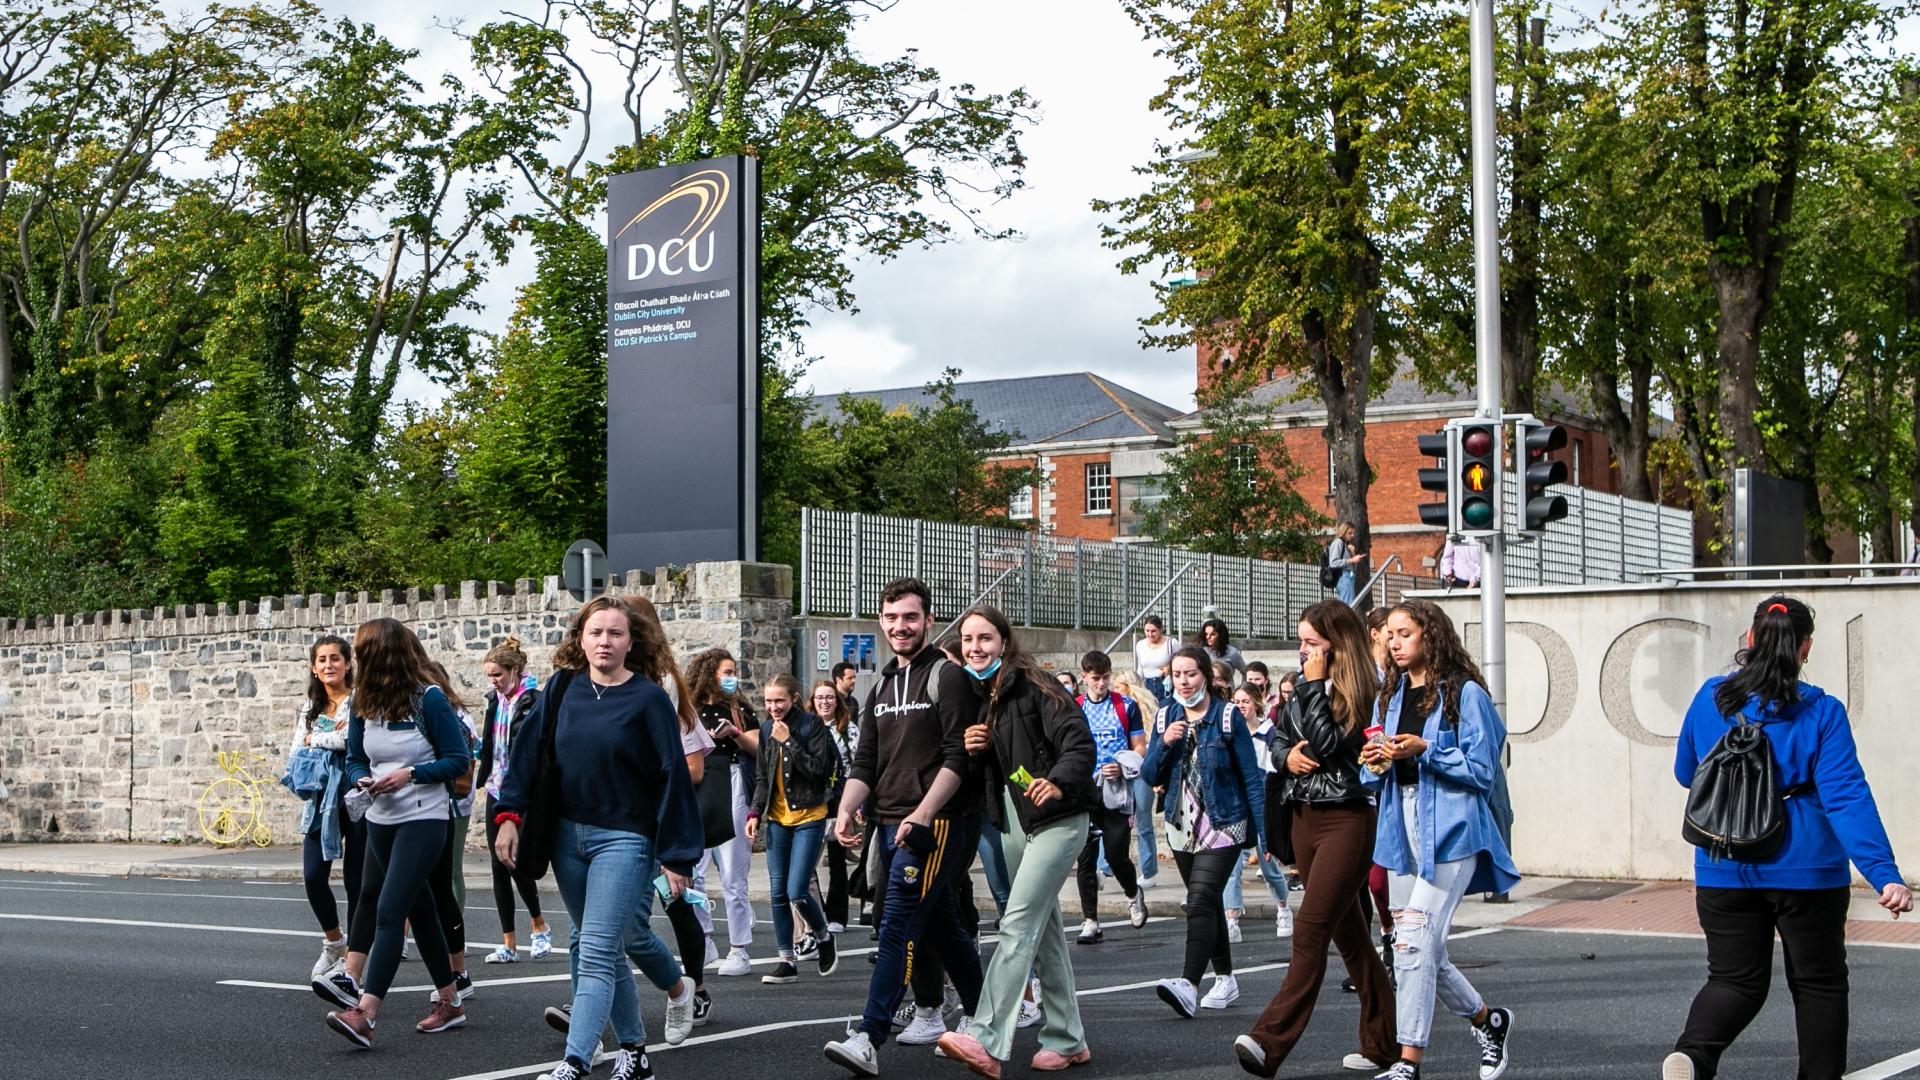 Dublin City University | DCU